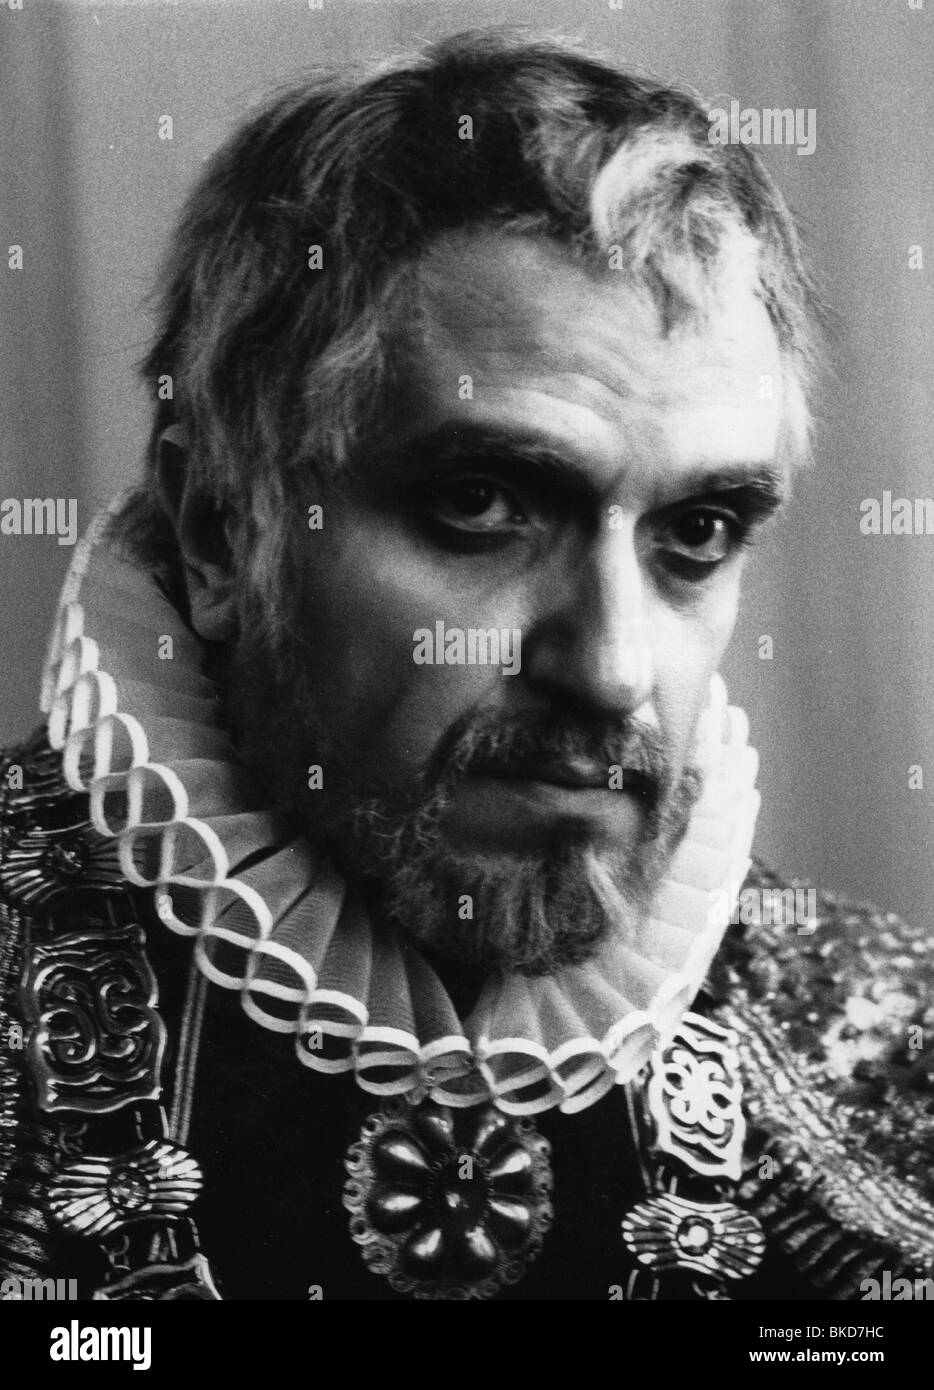 Raimondi, Ruggero, * 3.10.1941, Italian opera singer, as 'Philip II' in the opera 'Don Carlos' (Giuseppe Verdi), portrait, 1975, Stock Photo